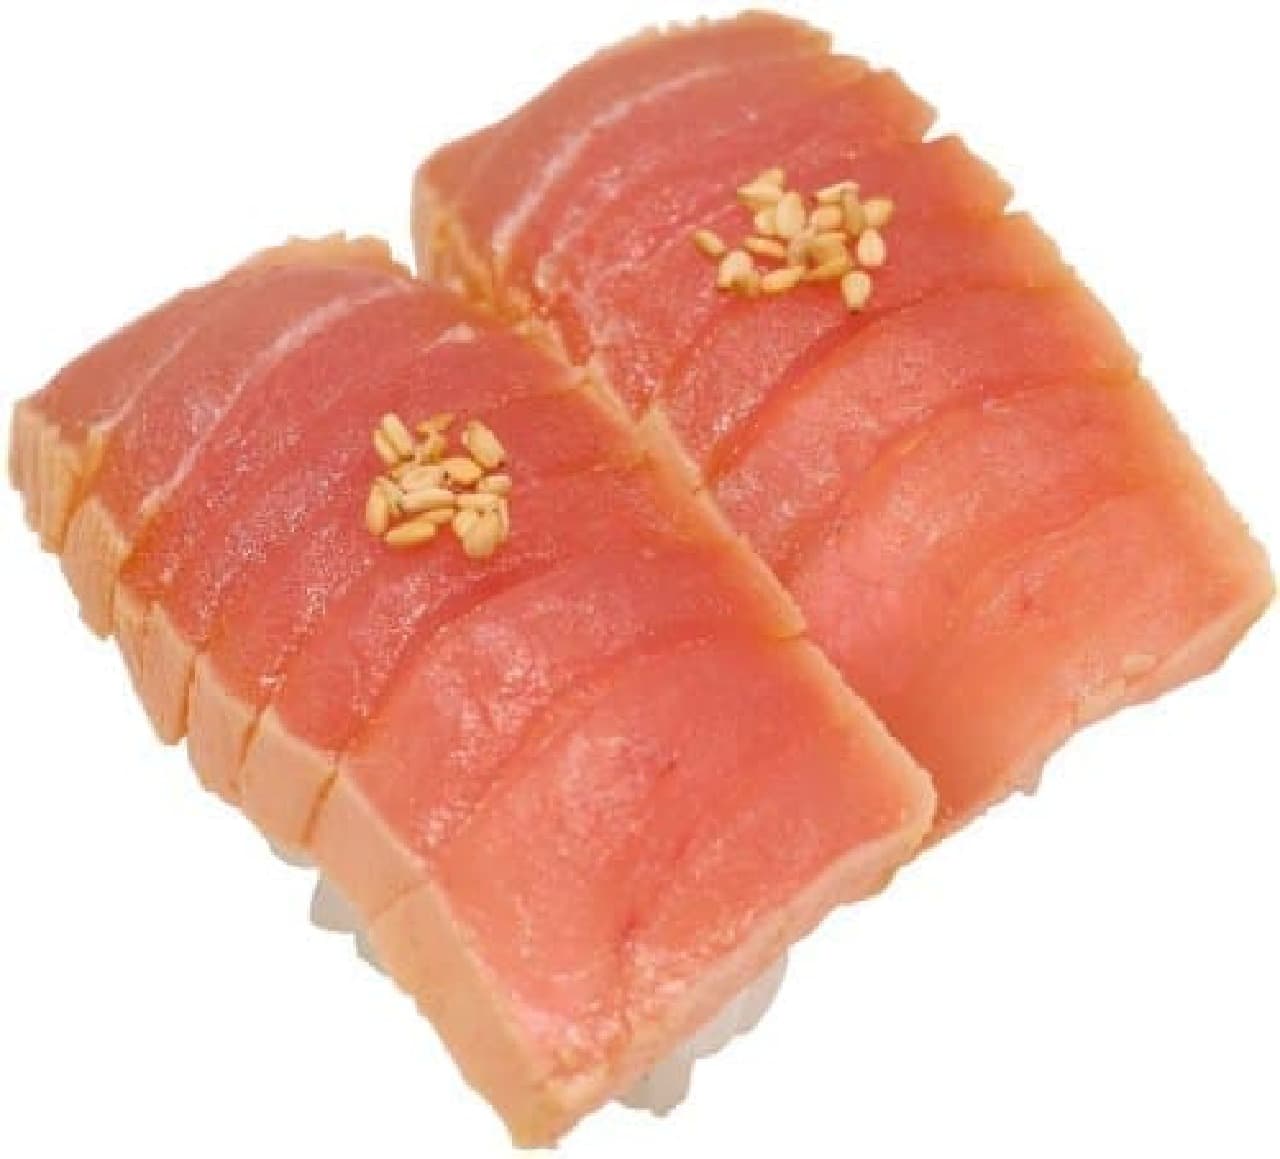 Sushiro "Local seasonal natural products! Sushiro x Haneda Market" 2 pieces of raw tuna